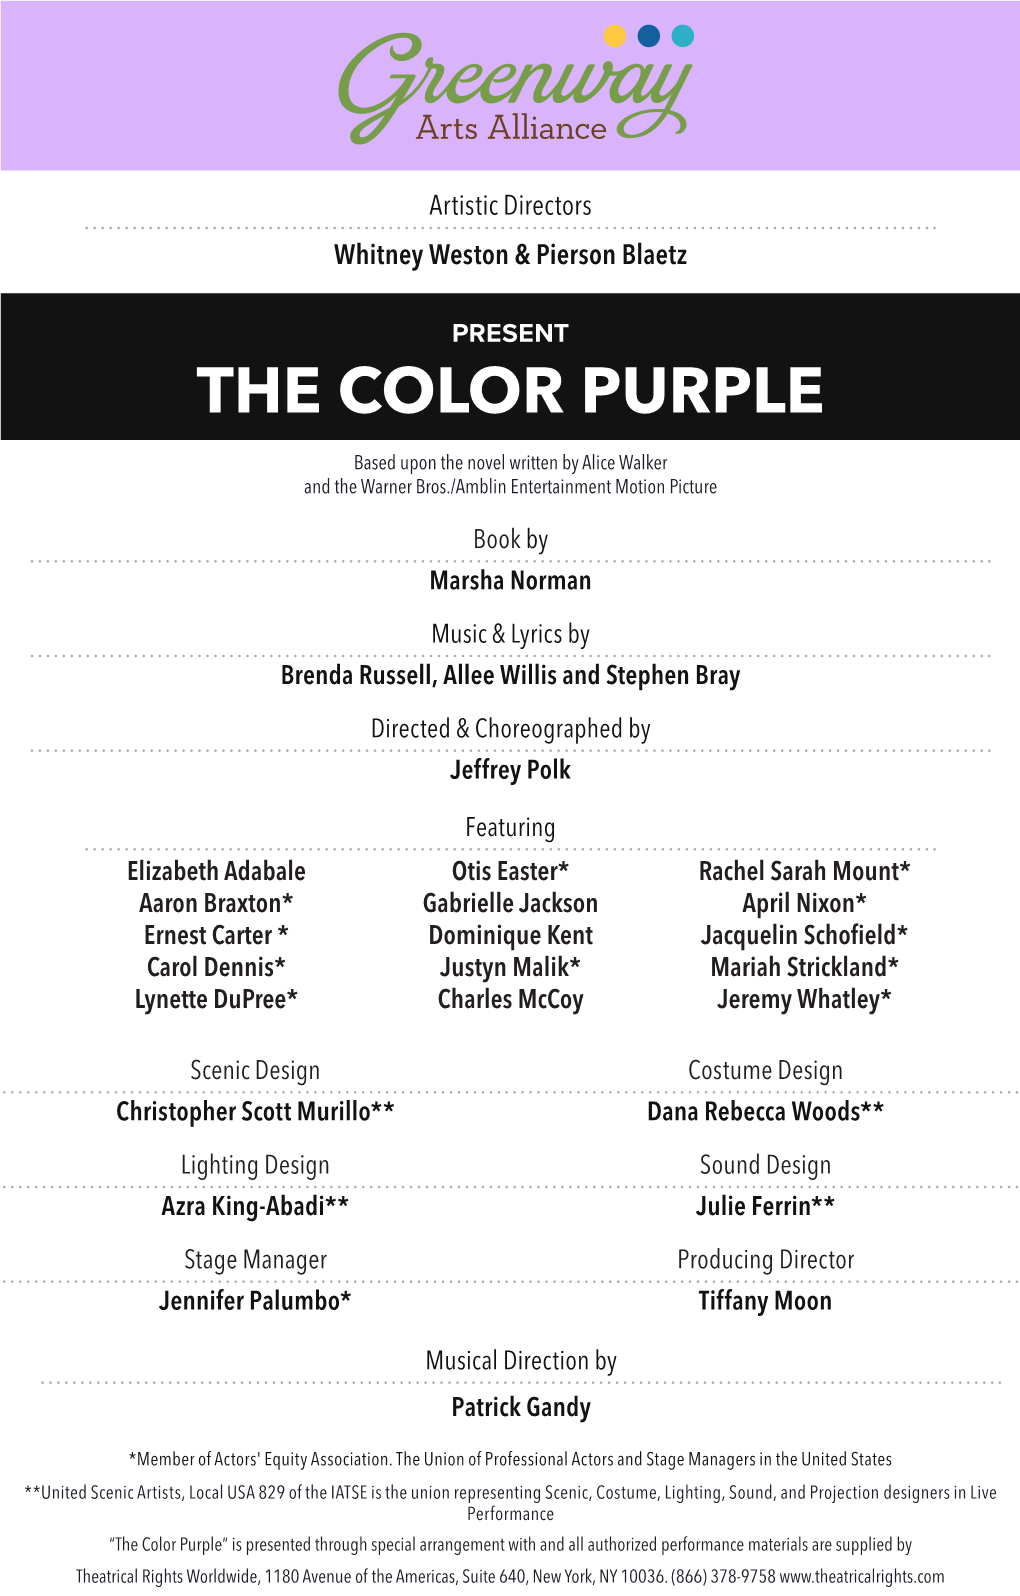 The Color Purple Program